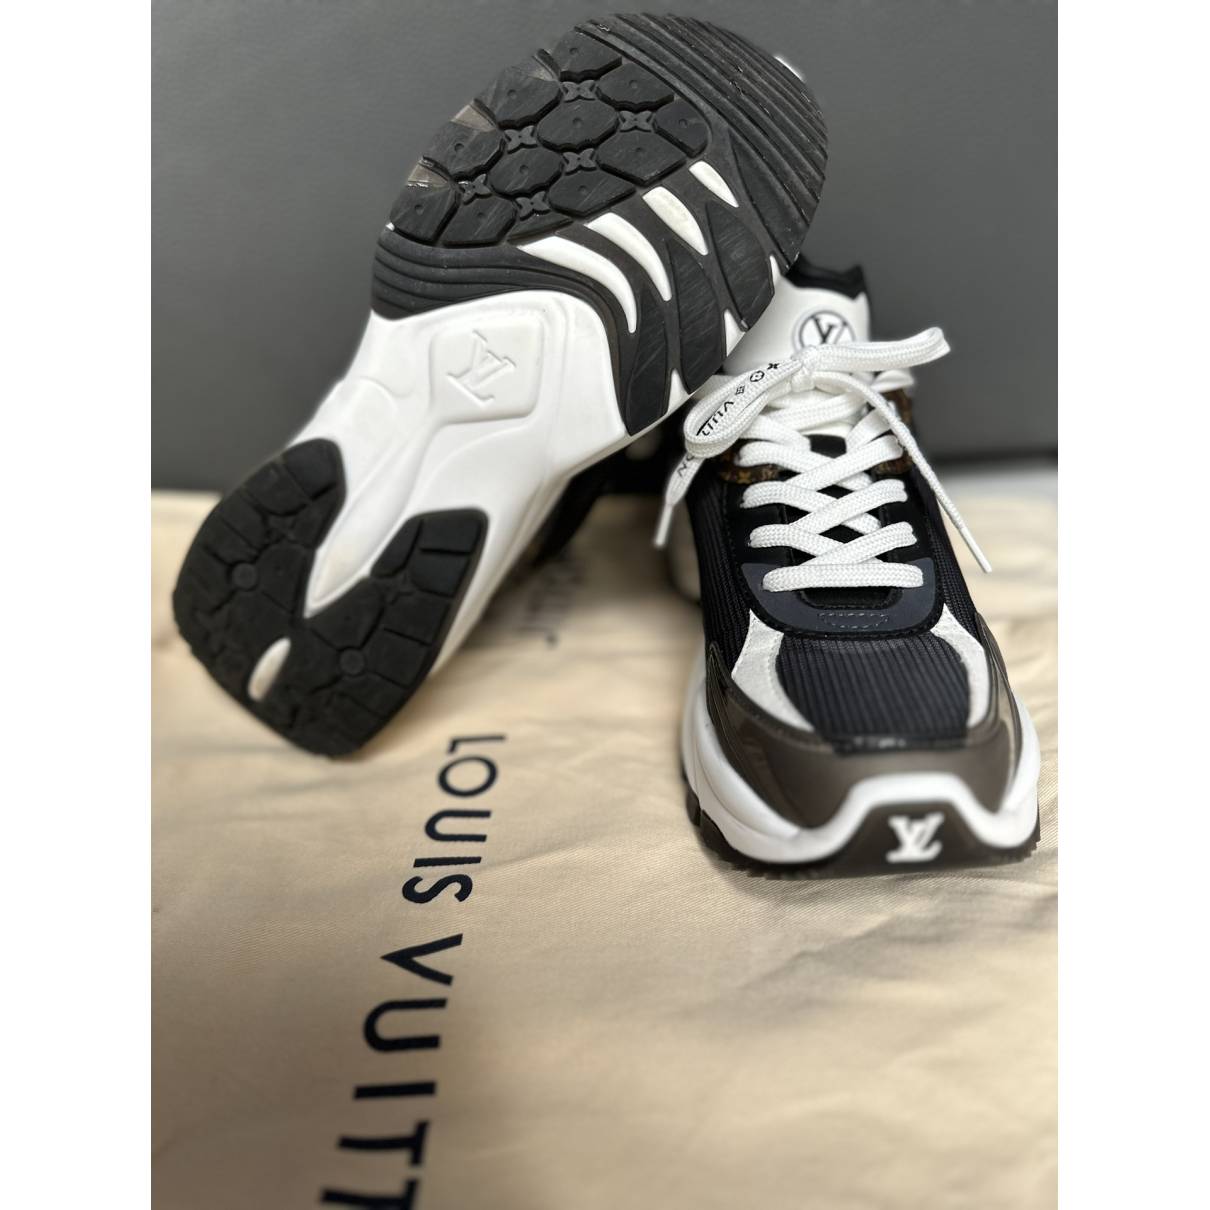 Louis Vuitton Women's Run 55 Sneakers Mixed Materials - ShopStyle